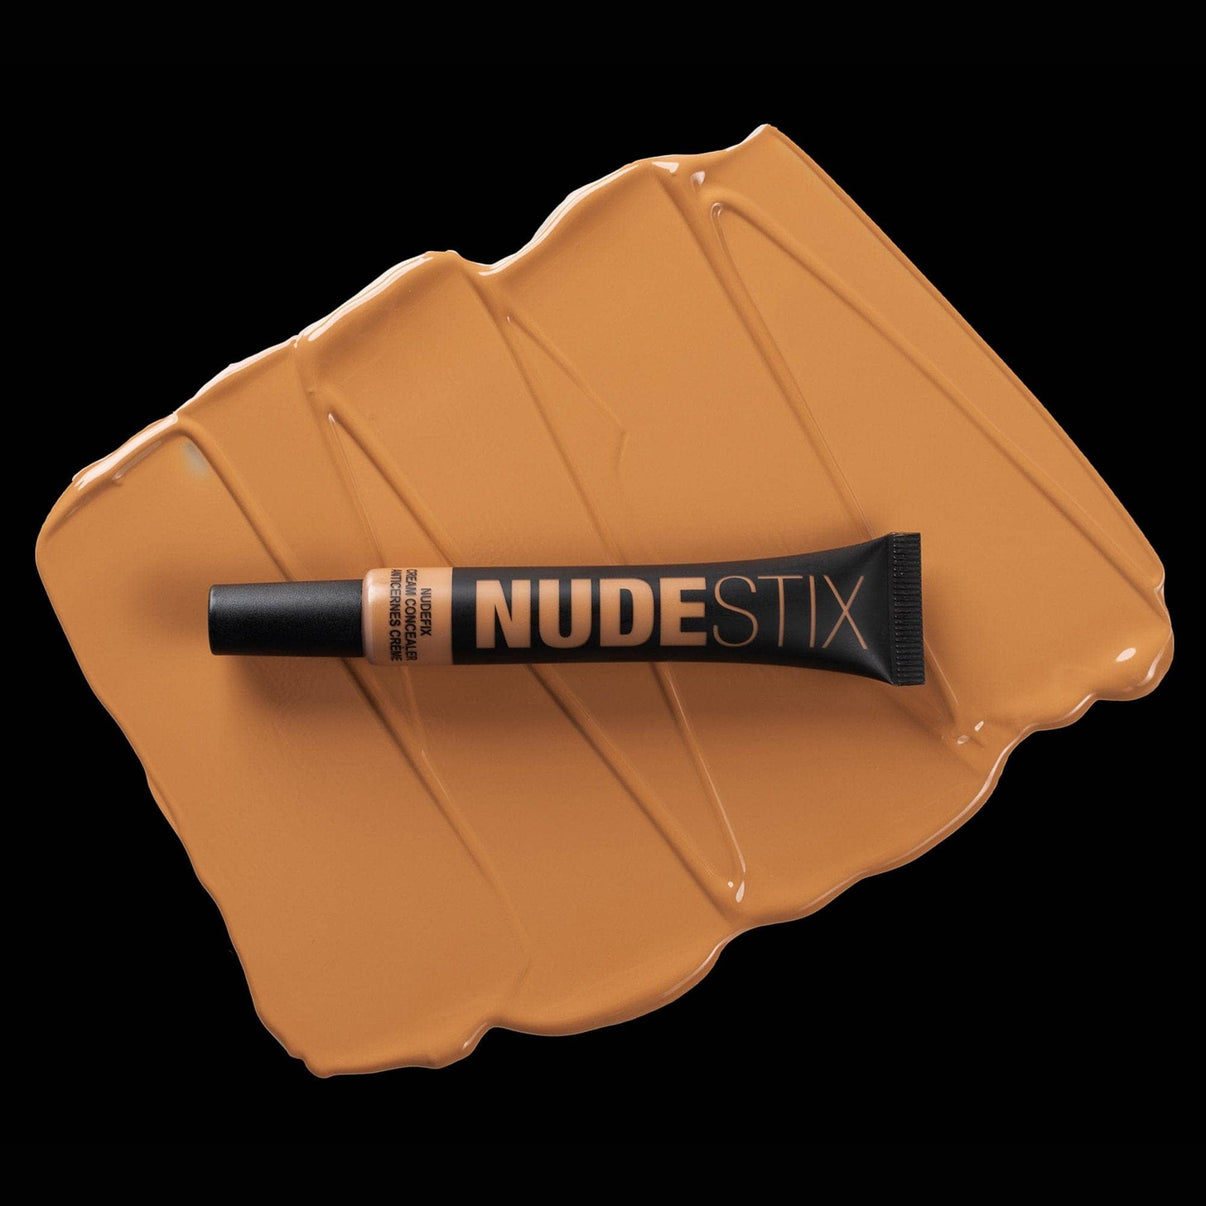 Nudefix cream concealer in shade nude 8 on top of texture swatch